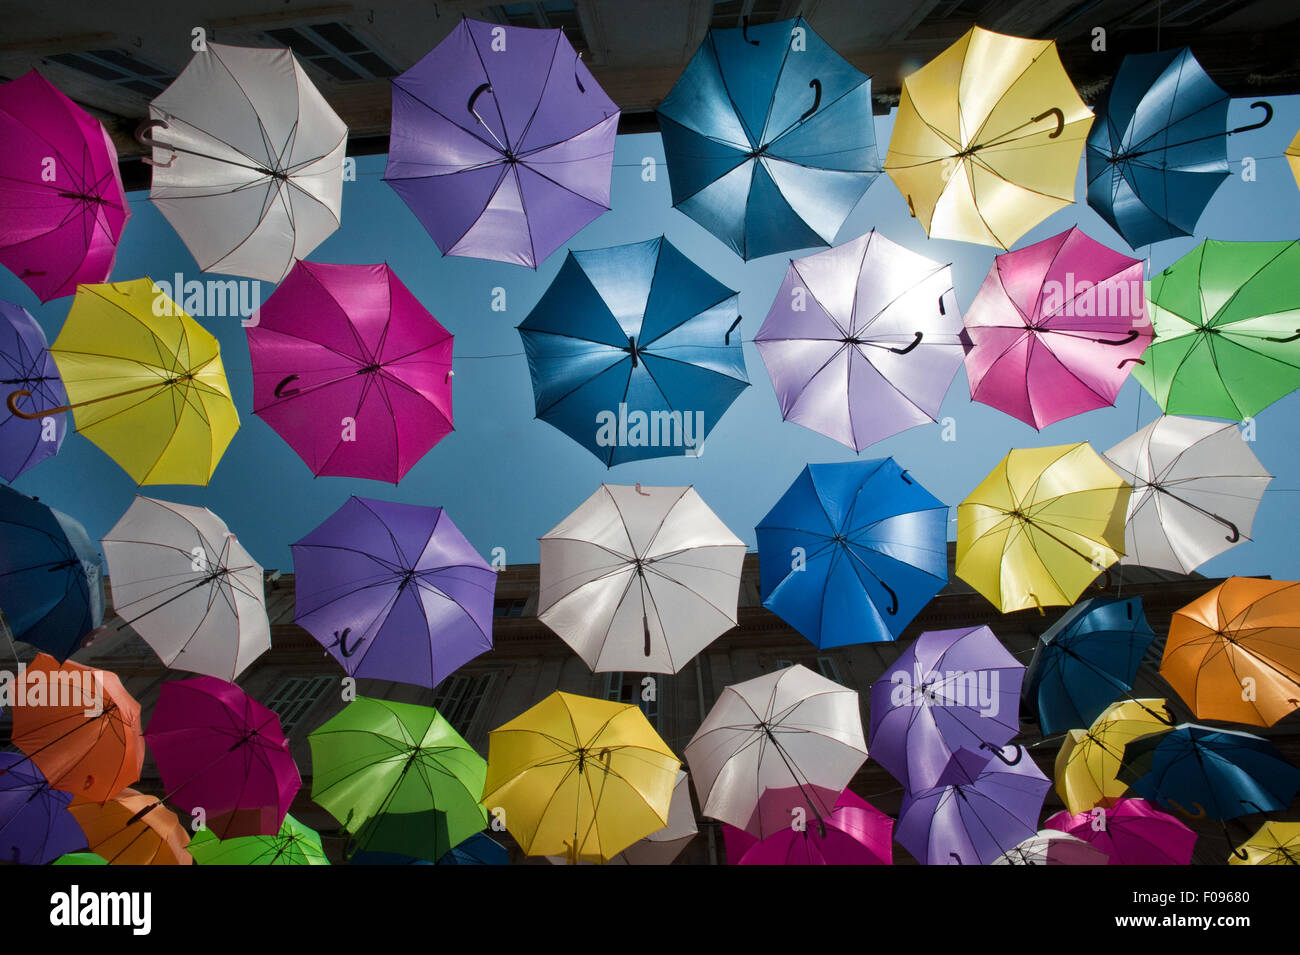 Vivacemente colorato floating ombrelloni riempire il cielo sopra la Rue Jean Jaures, Arles,Bouches-du-Rhône, Provenza, Francia Foto Stock